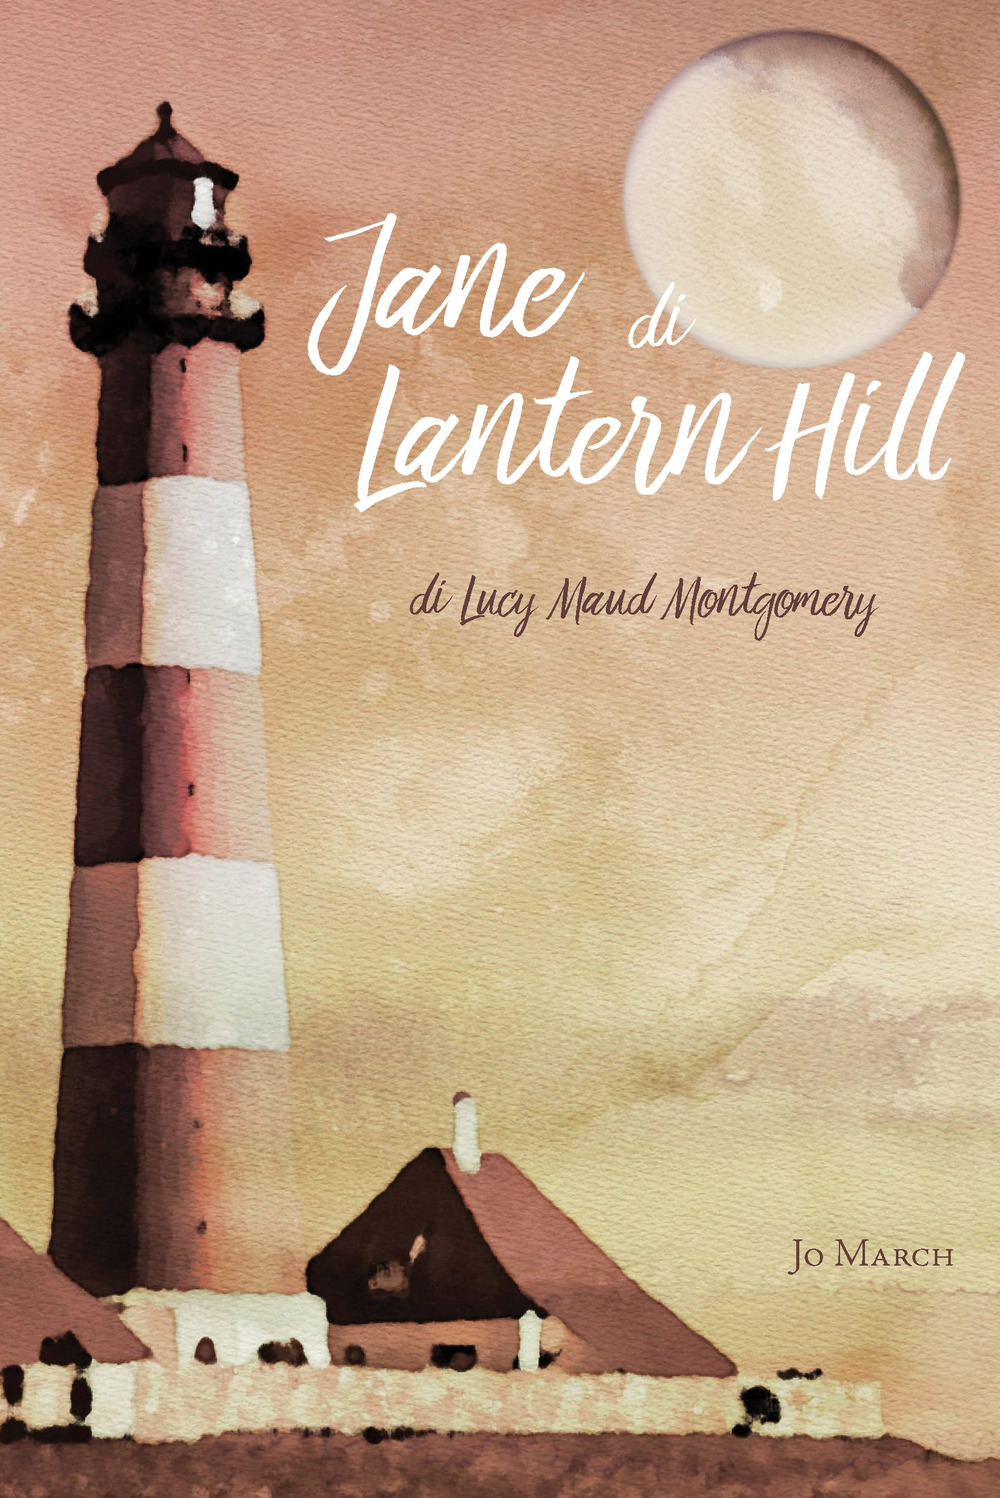 Jane di Lantern Hill